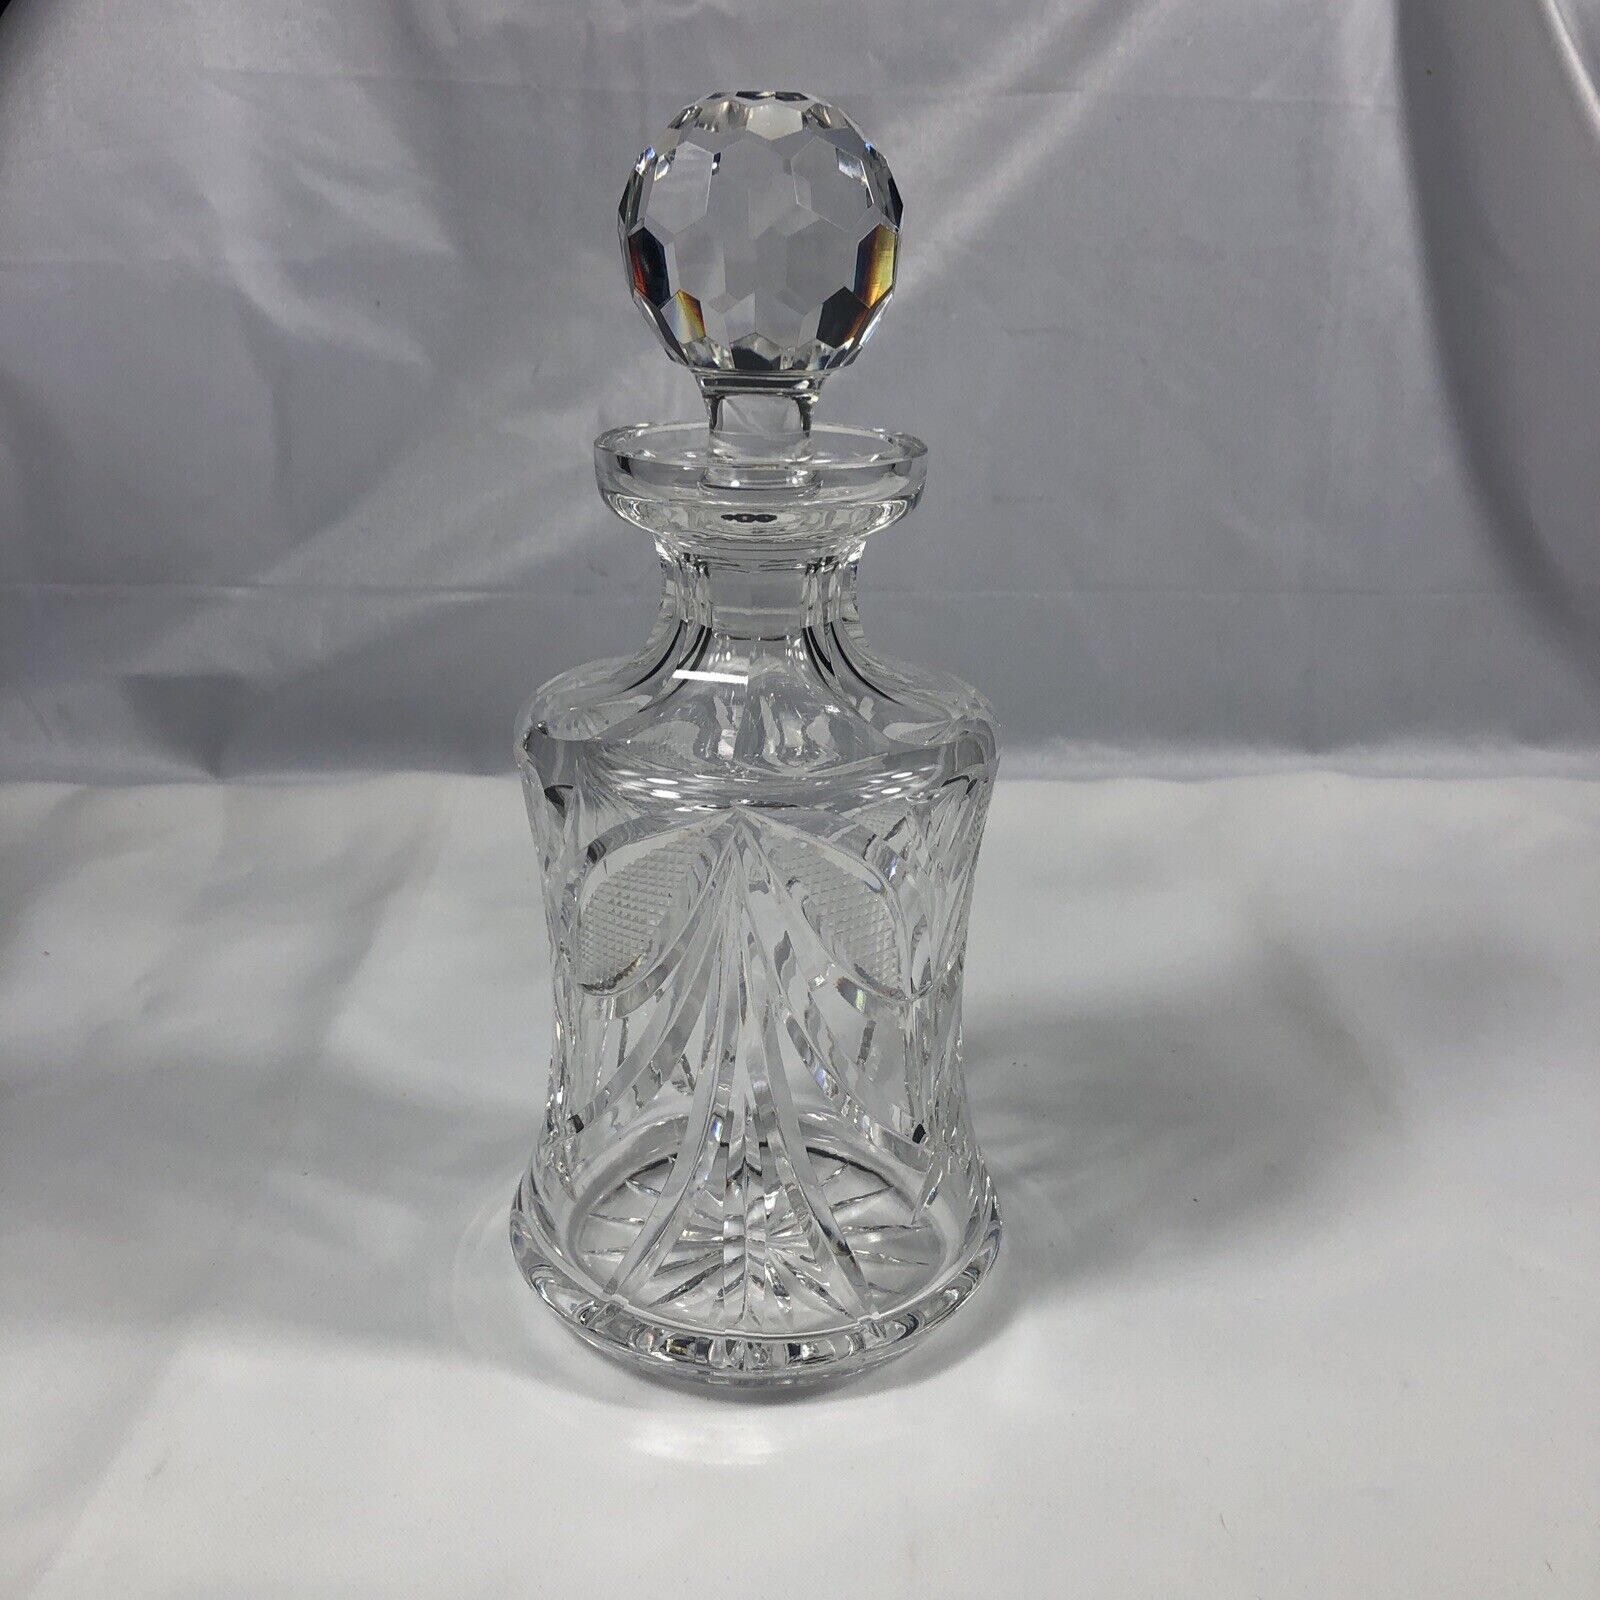 Vintage Waterford Crystal Liquor Decanter Bottle w/ Stopper